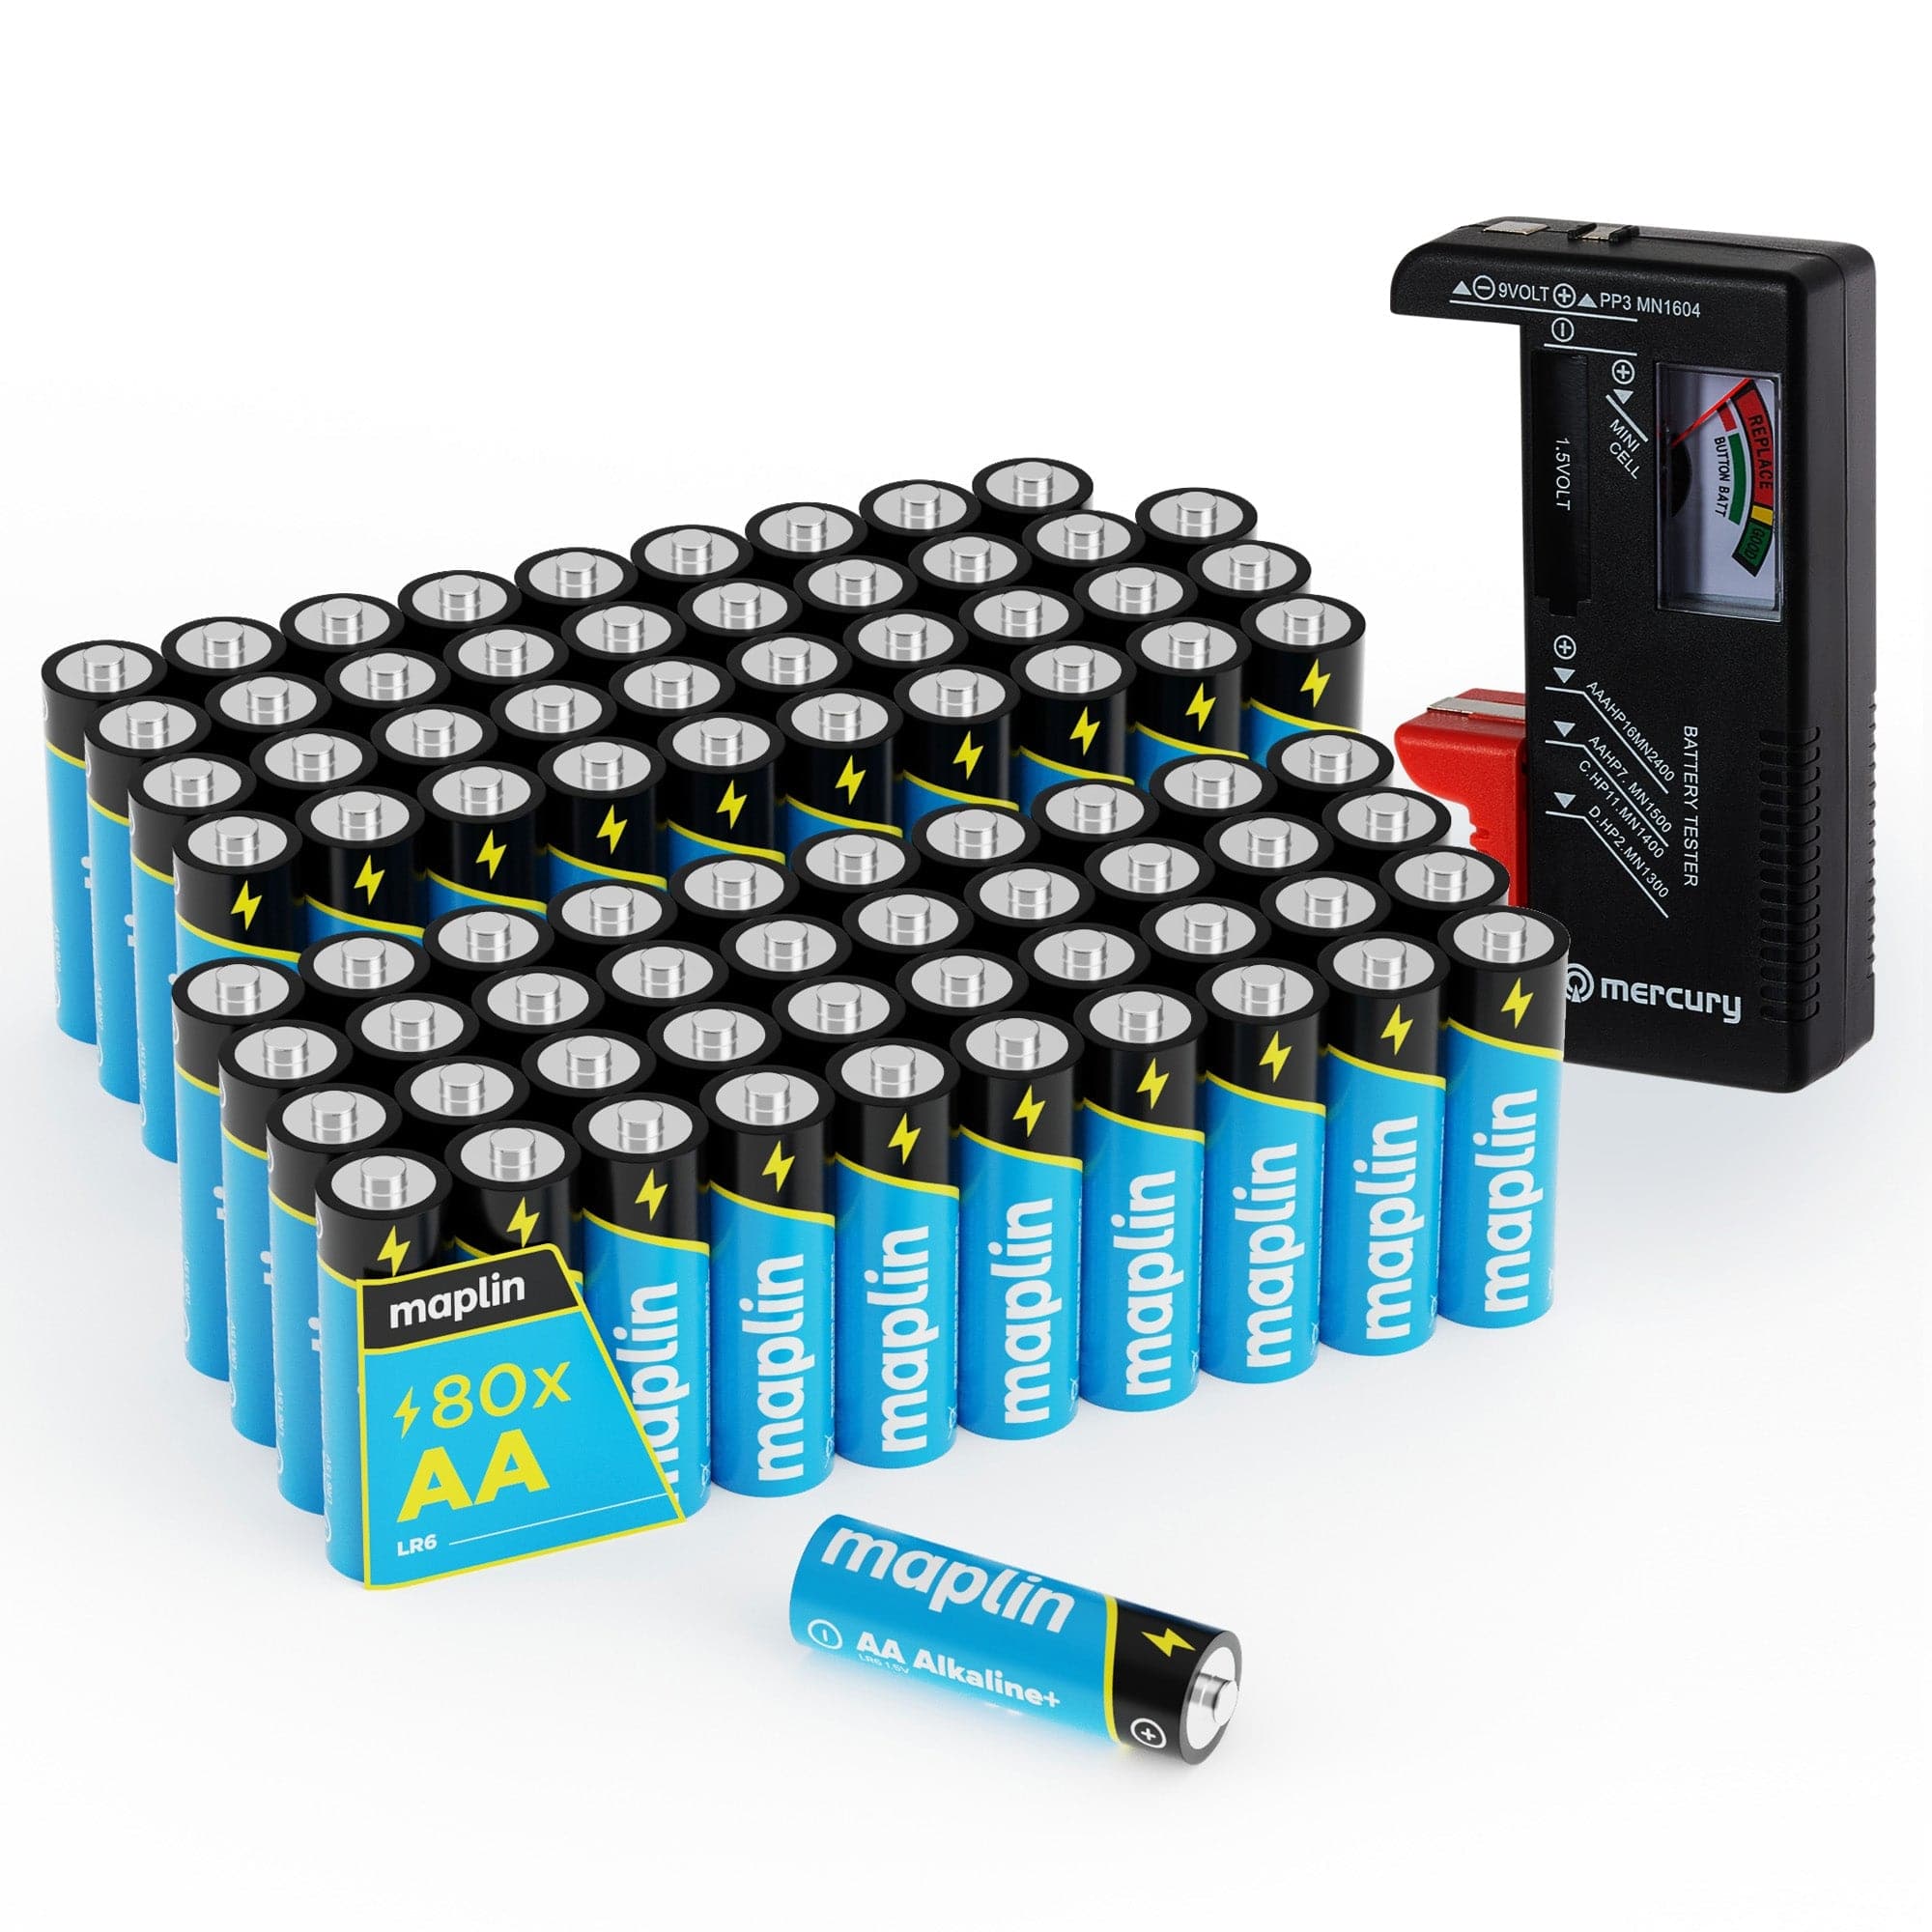 Maplin 80x AA LR6 7 Year Shelf Life 1.5V High Performance Alkaline Batteries with Universal Battery Tester